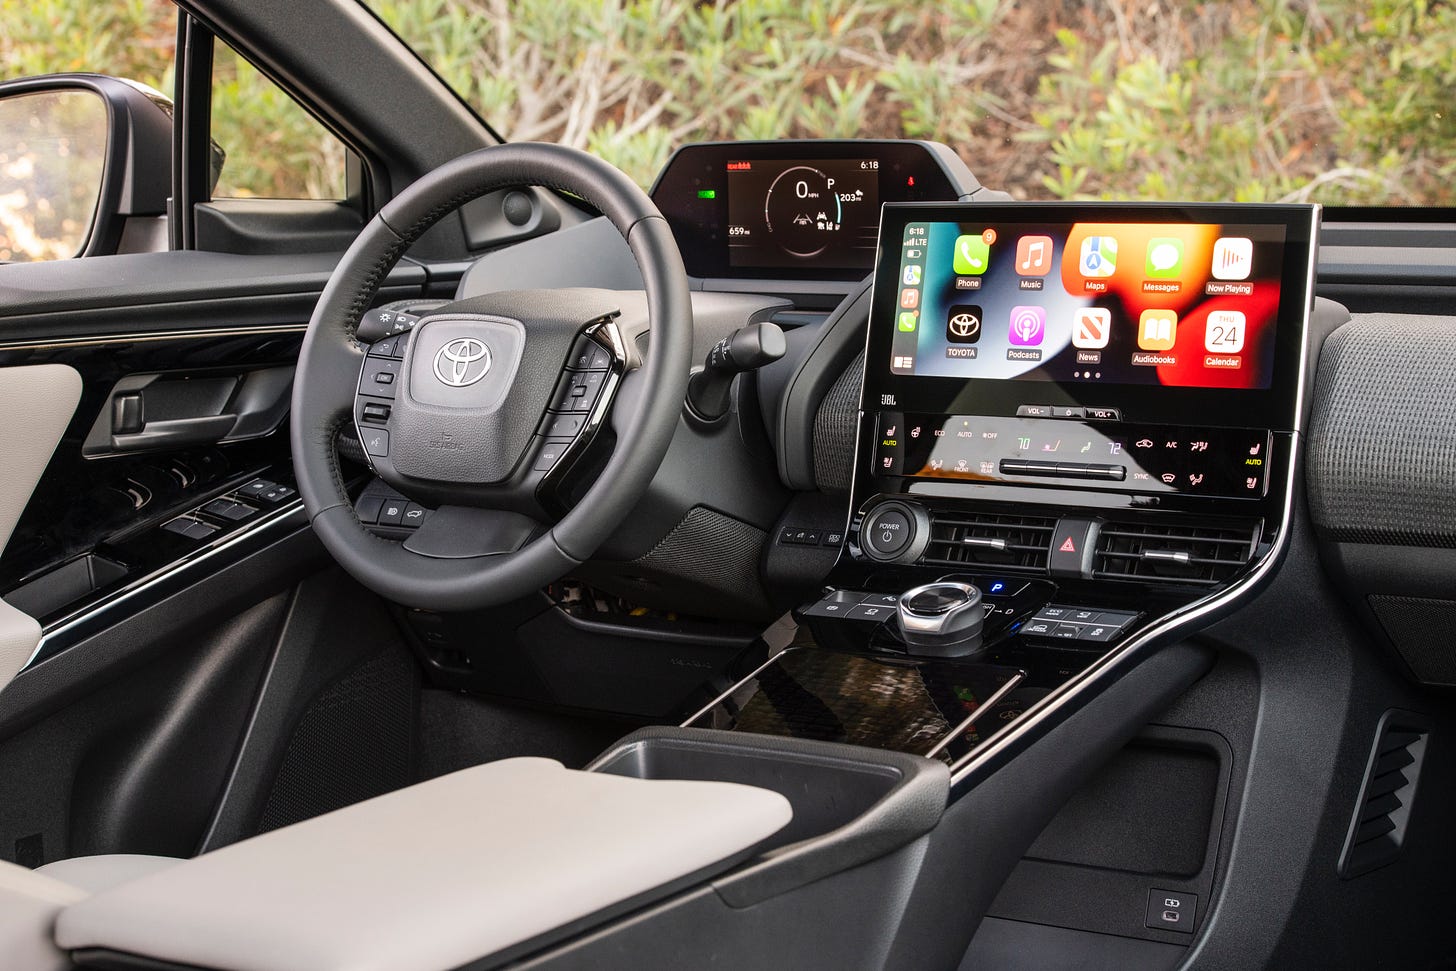 2022 Toyota bZ4X interior showing Apple CarPlay